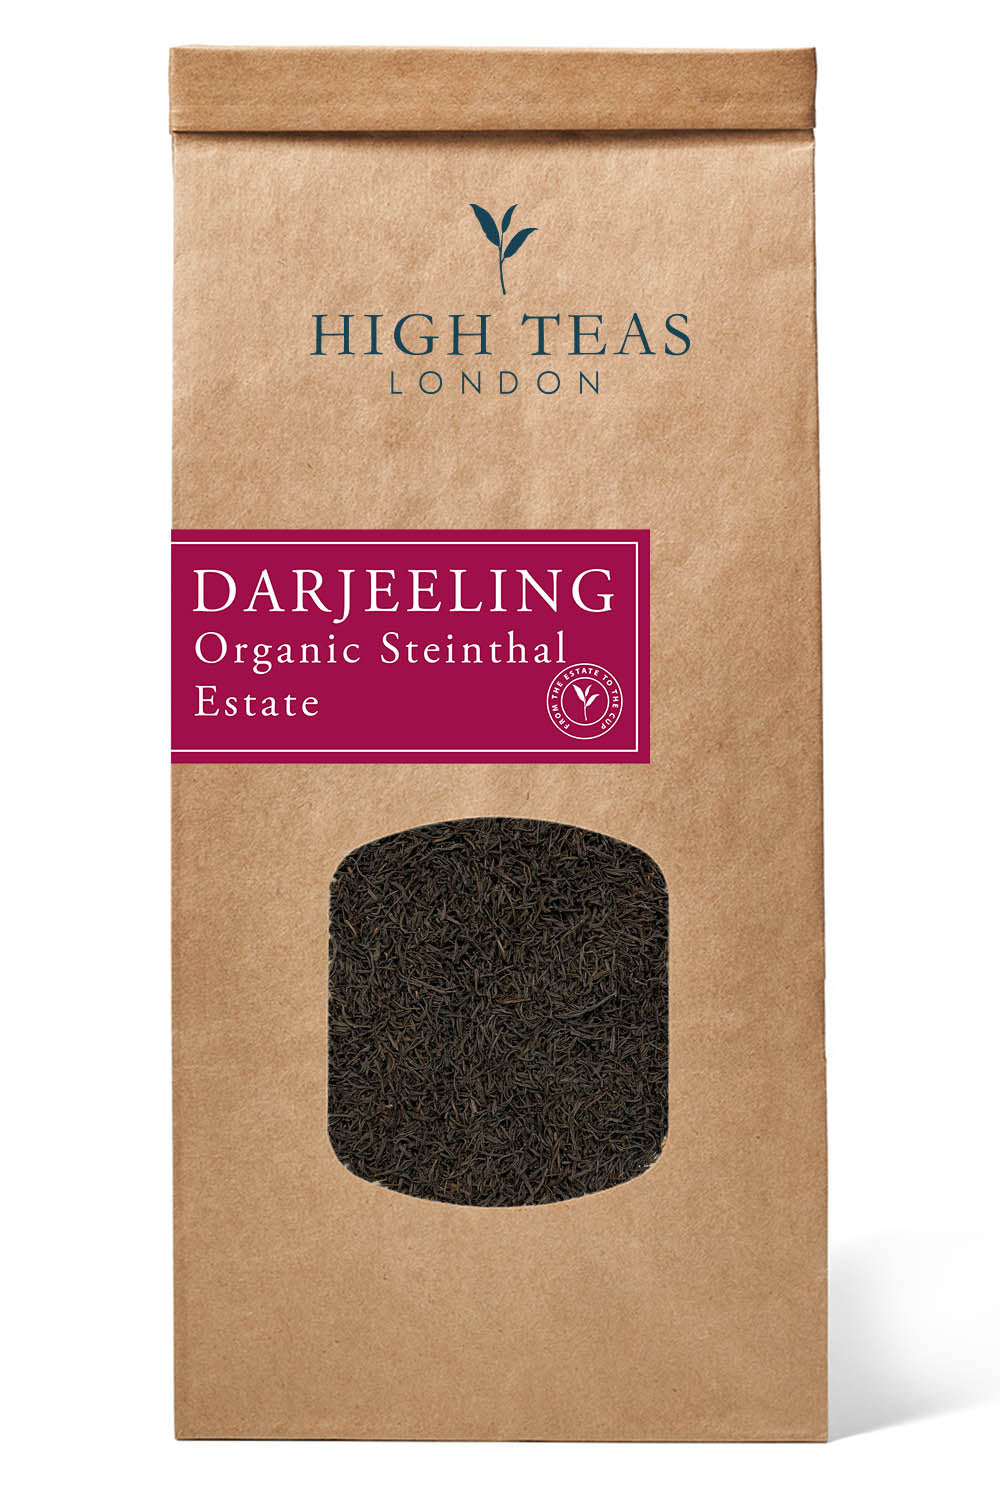 Darjeeling Organic Steinthal Estate-250g-Loose Leaf Tea-High Teas